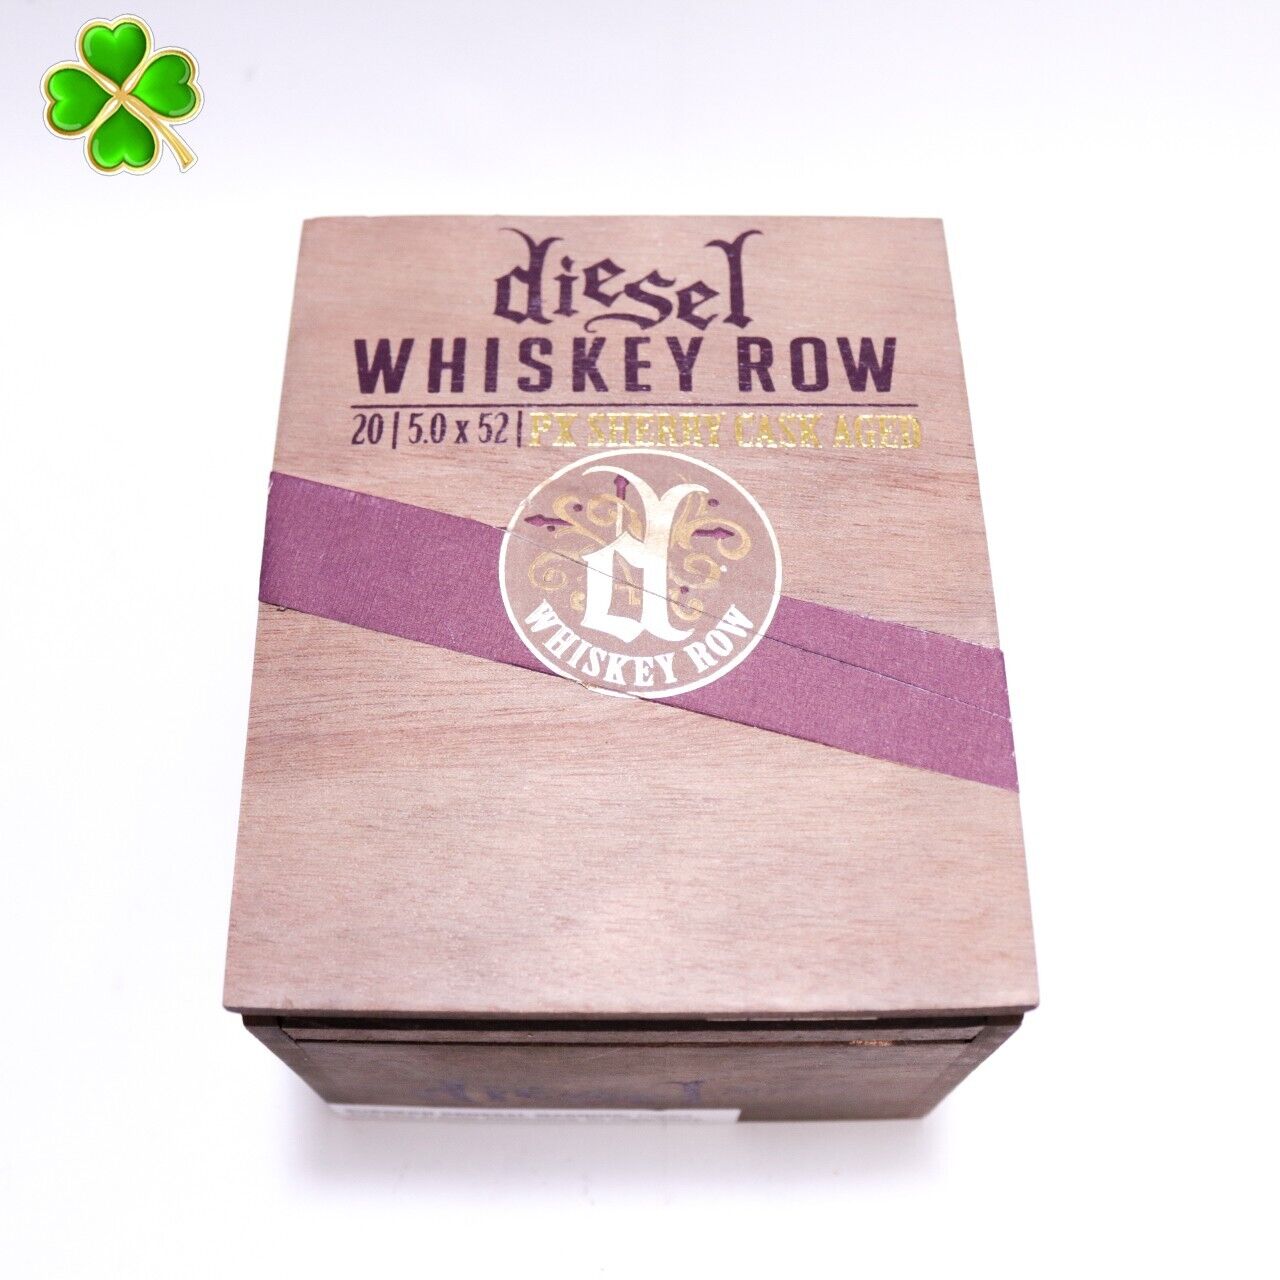 Diesel Whiskey Row Rabbit Hole PX Empty Wood Cigar Box 5.5\